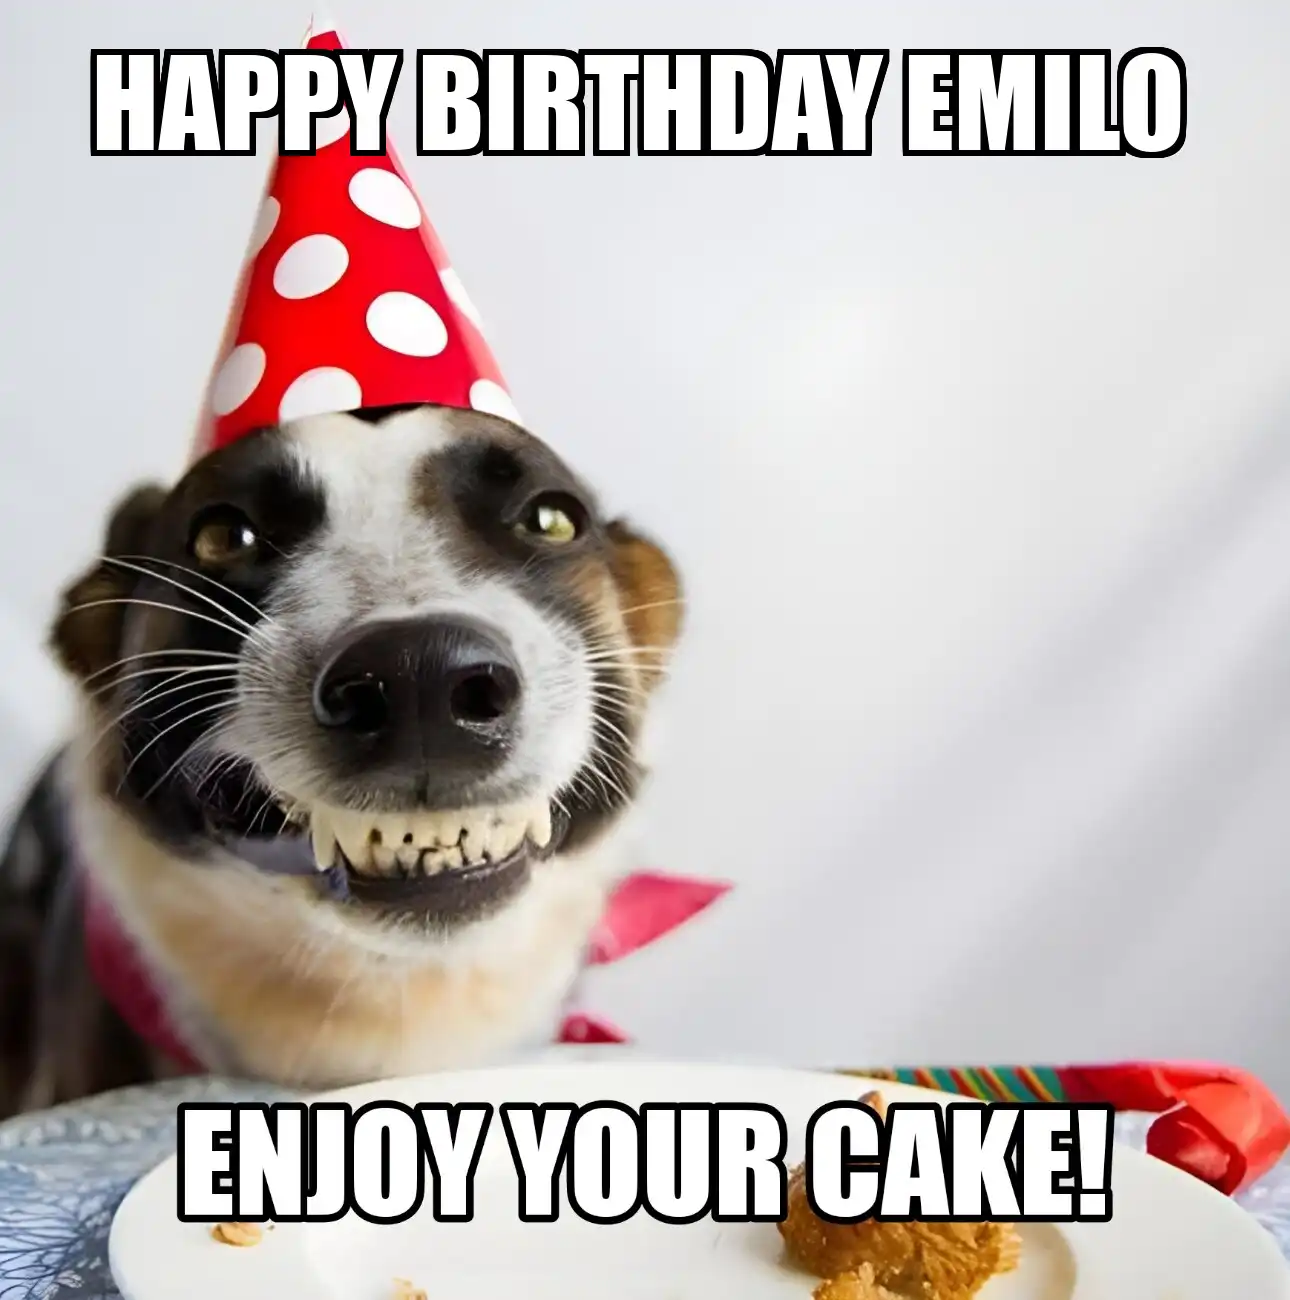 Happy Birthday Emilo Enjoy Your Cake Dog Meme